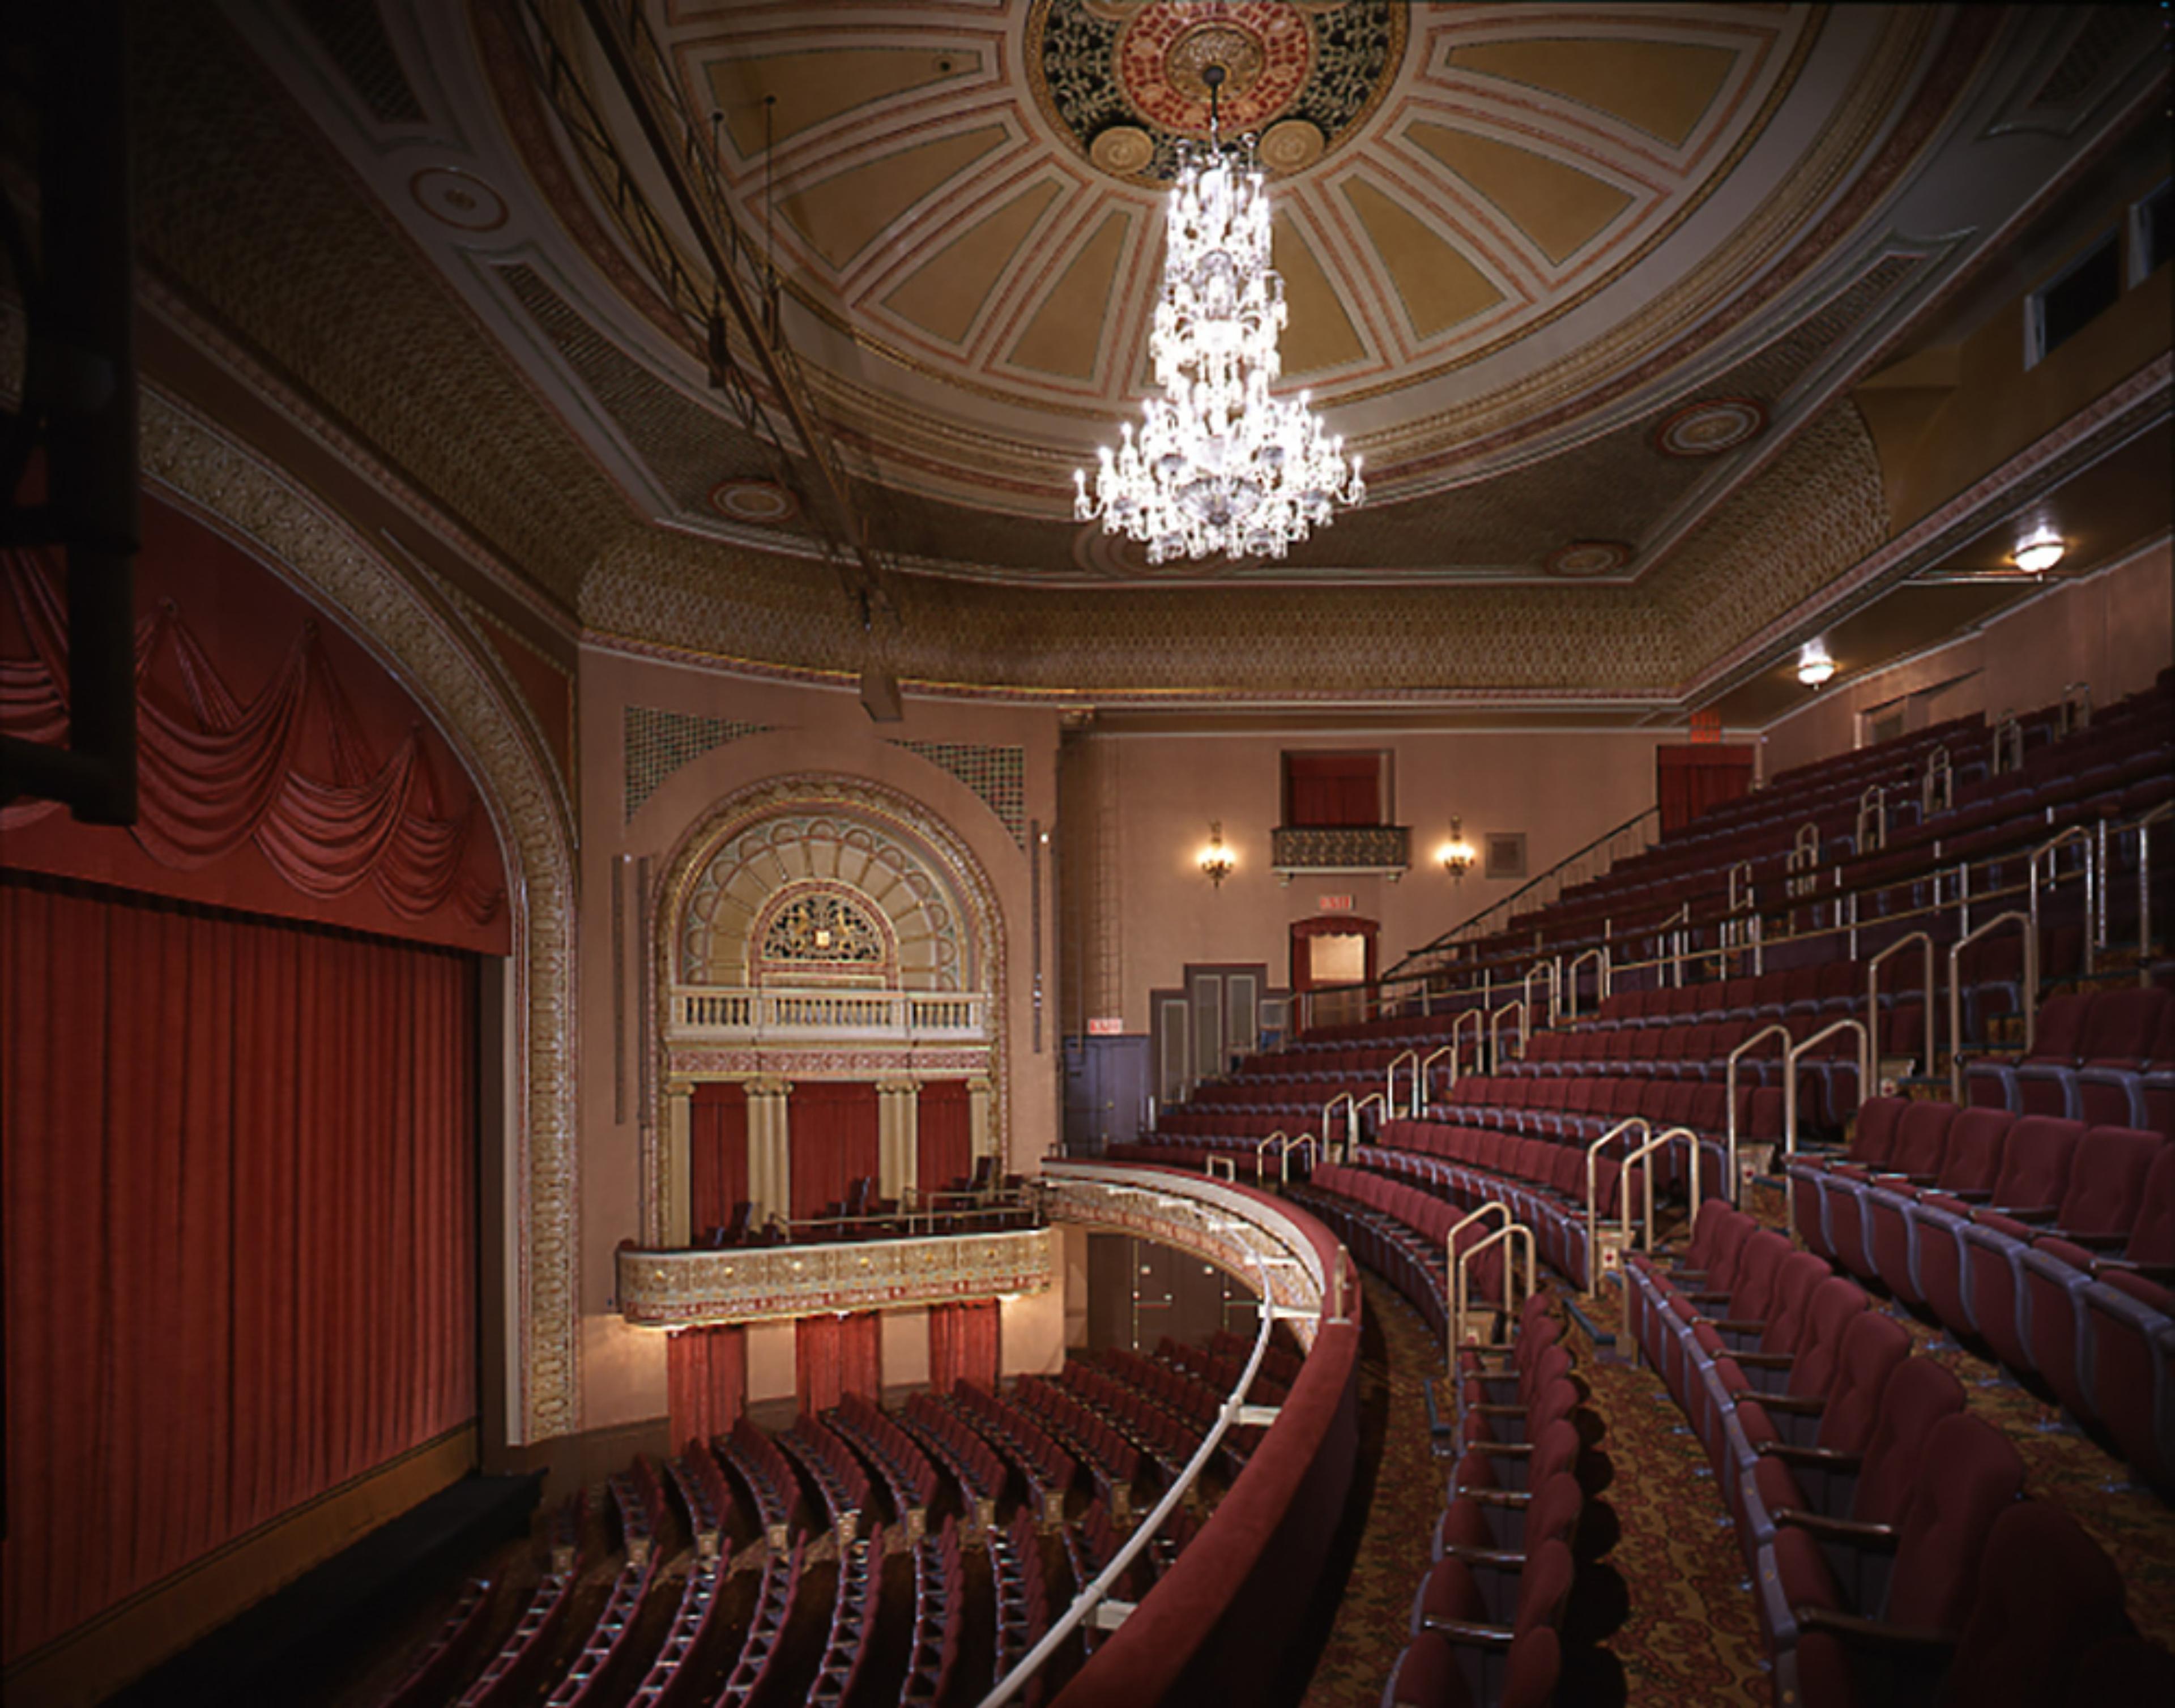 Barrymore Theatre